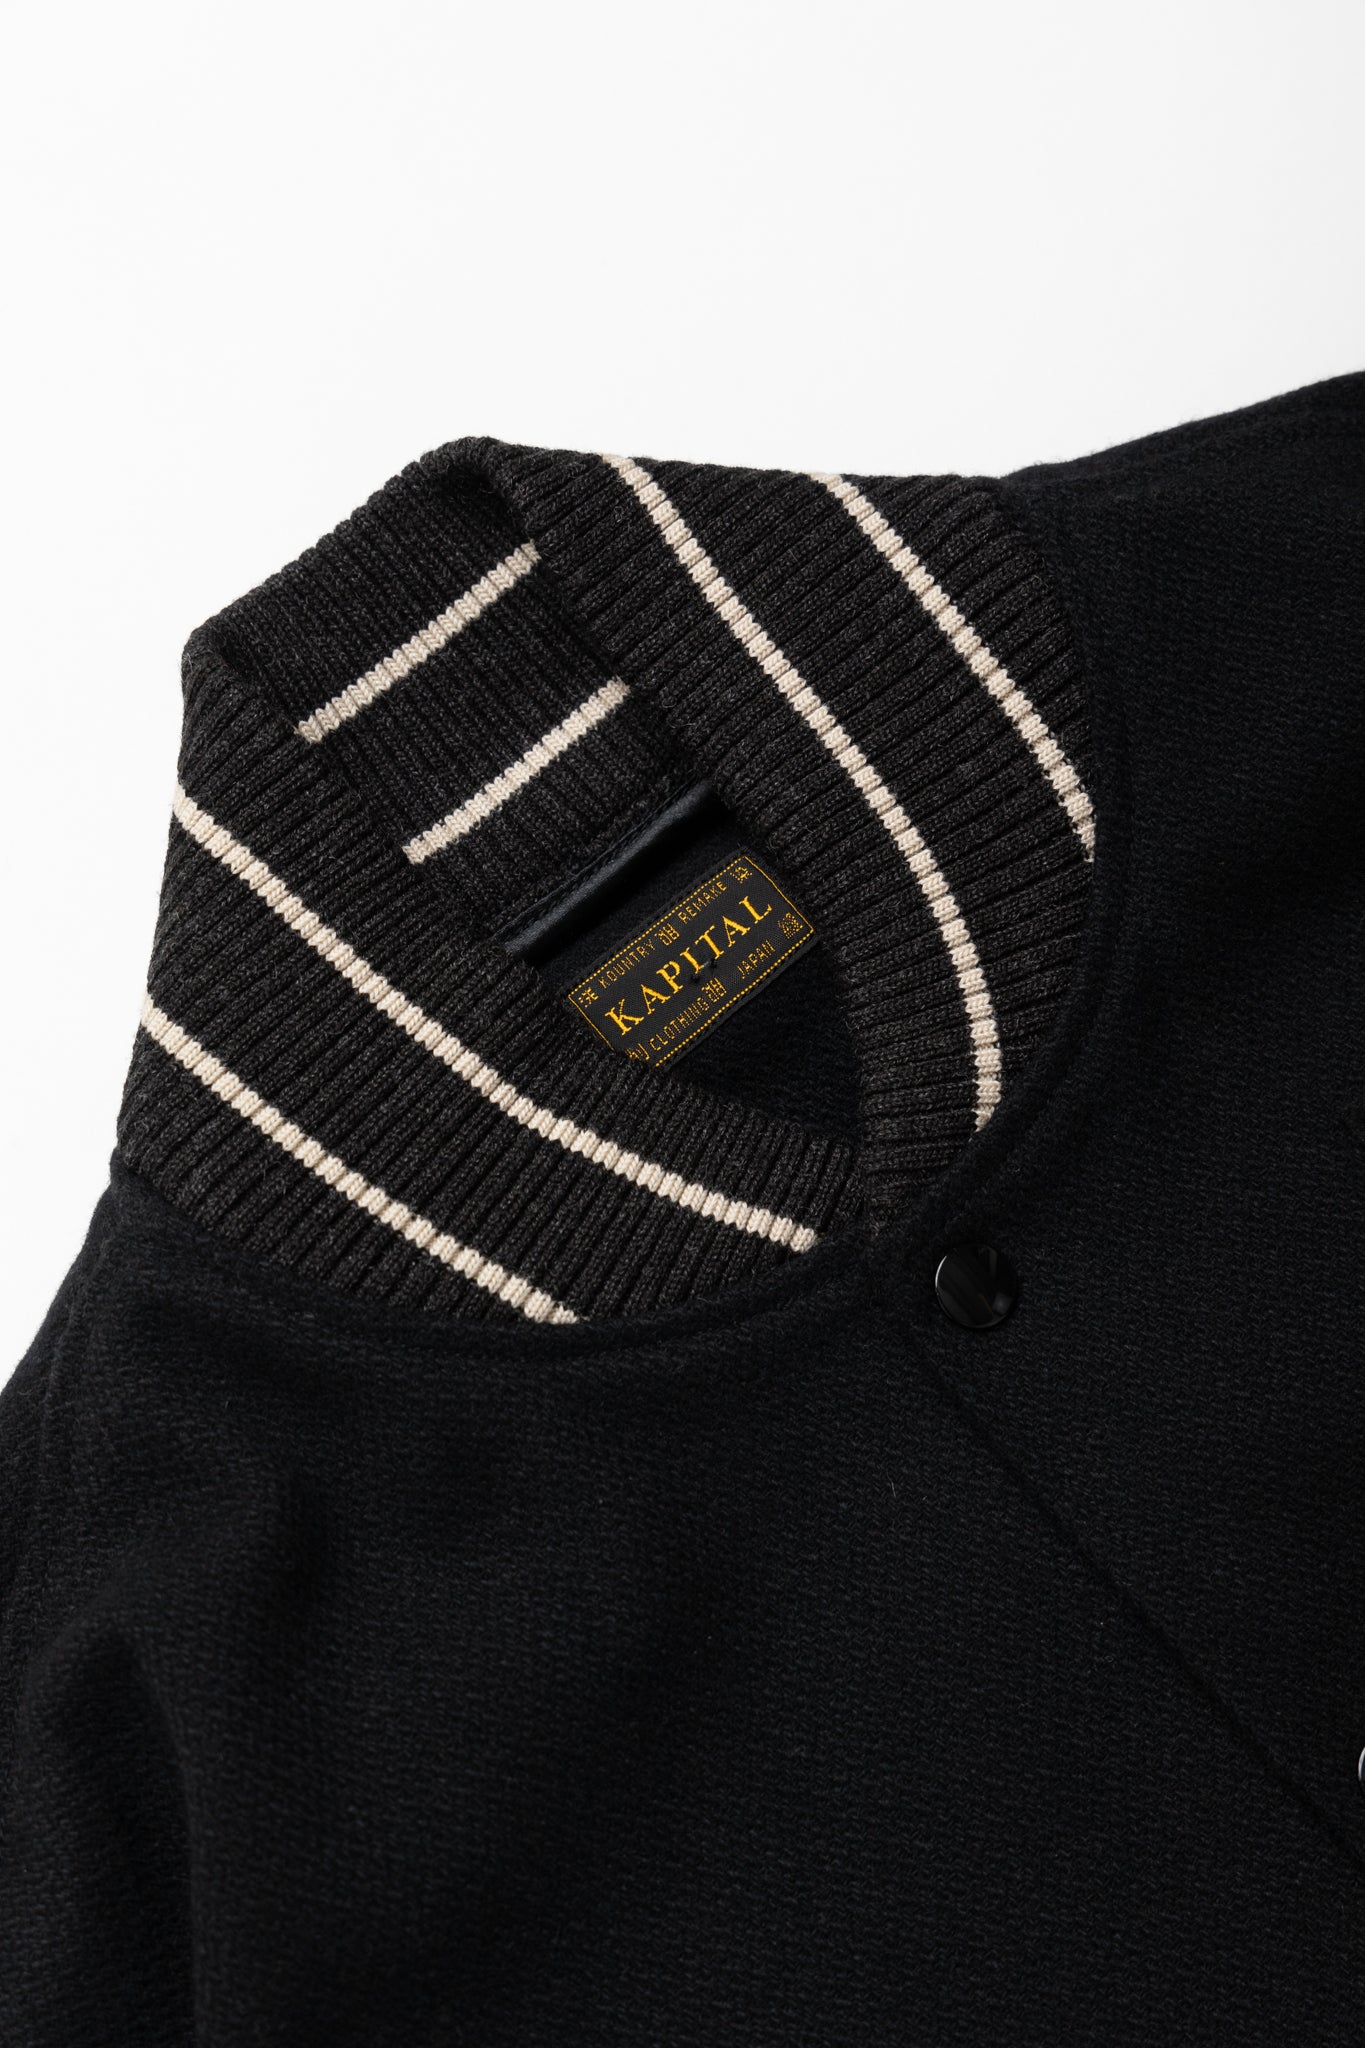 Capital P Leather Wool Black Varsity Jacket - Just American Jackets